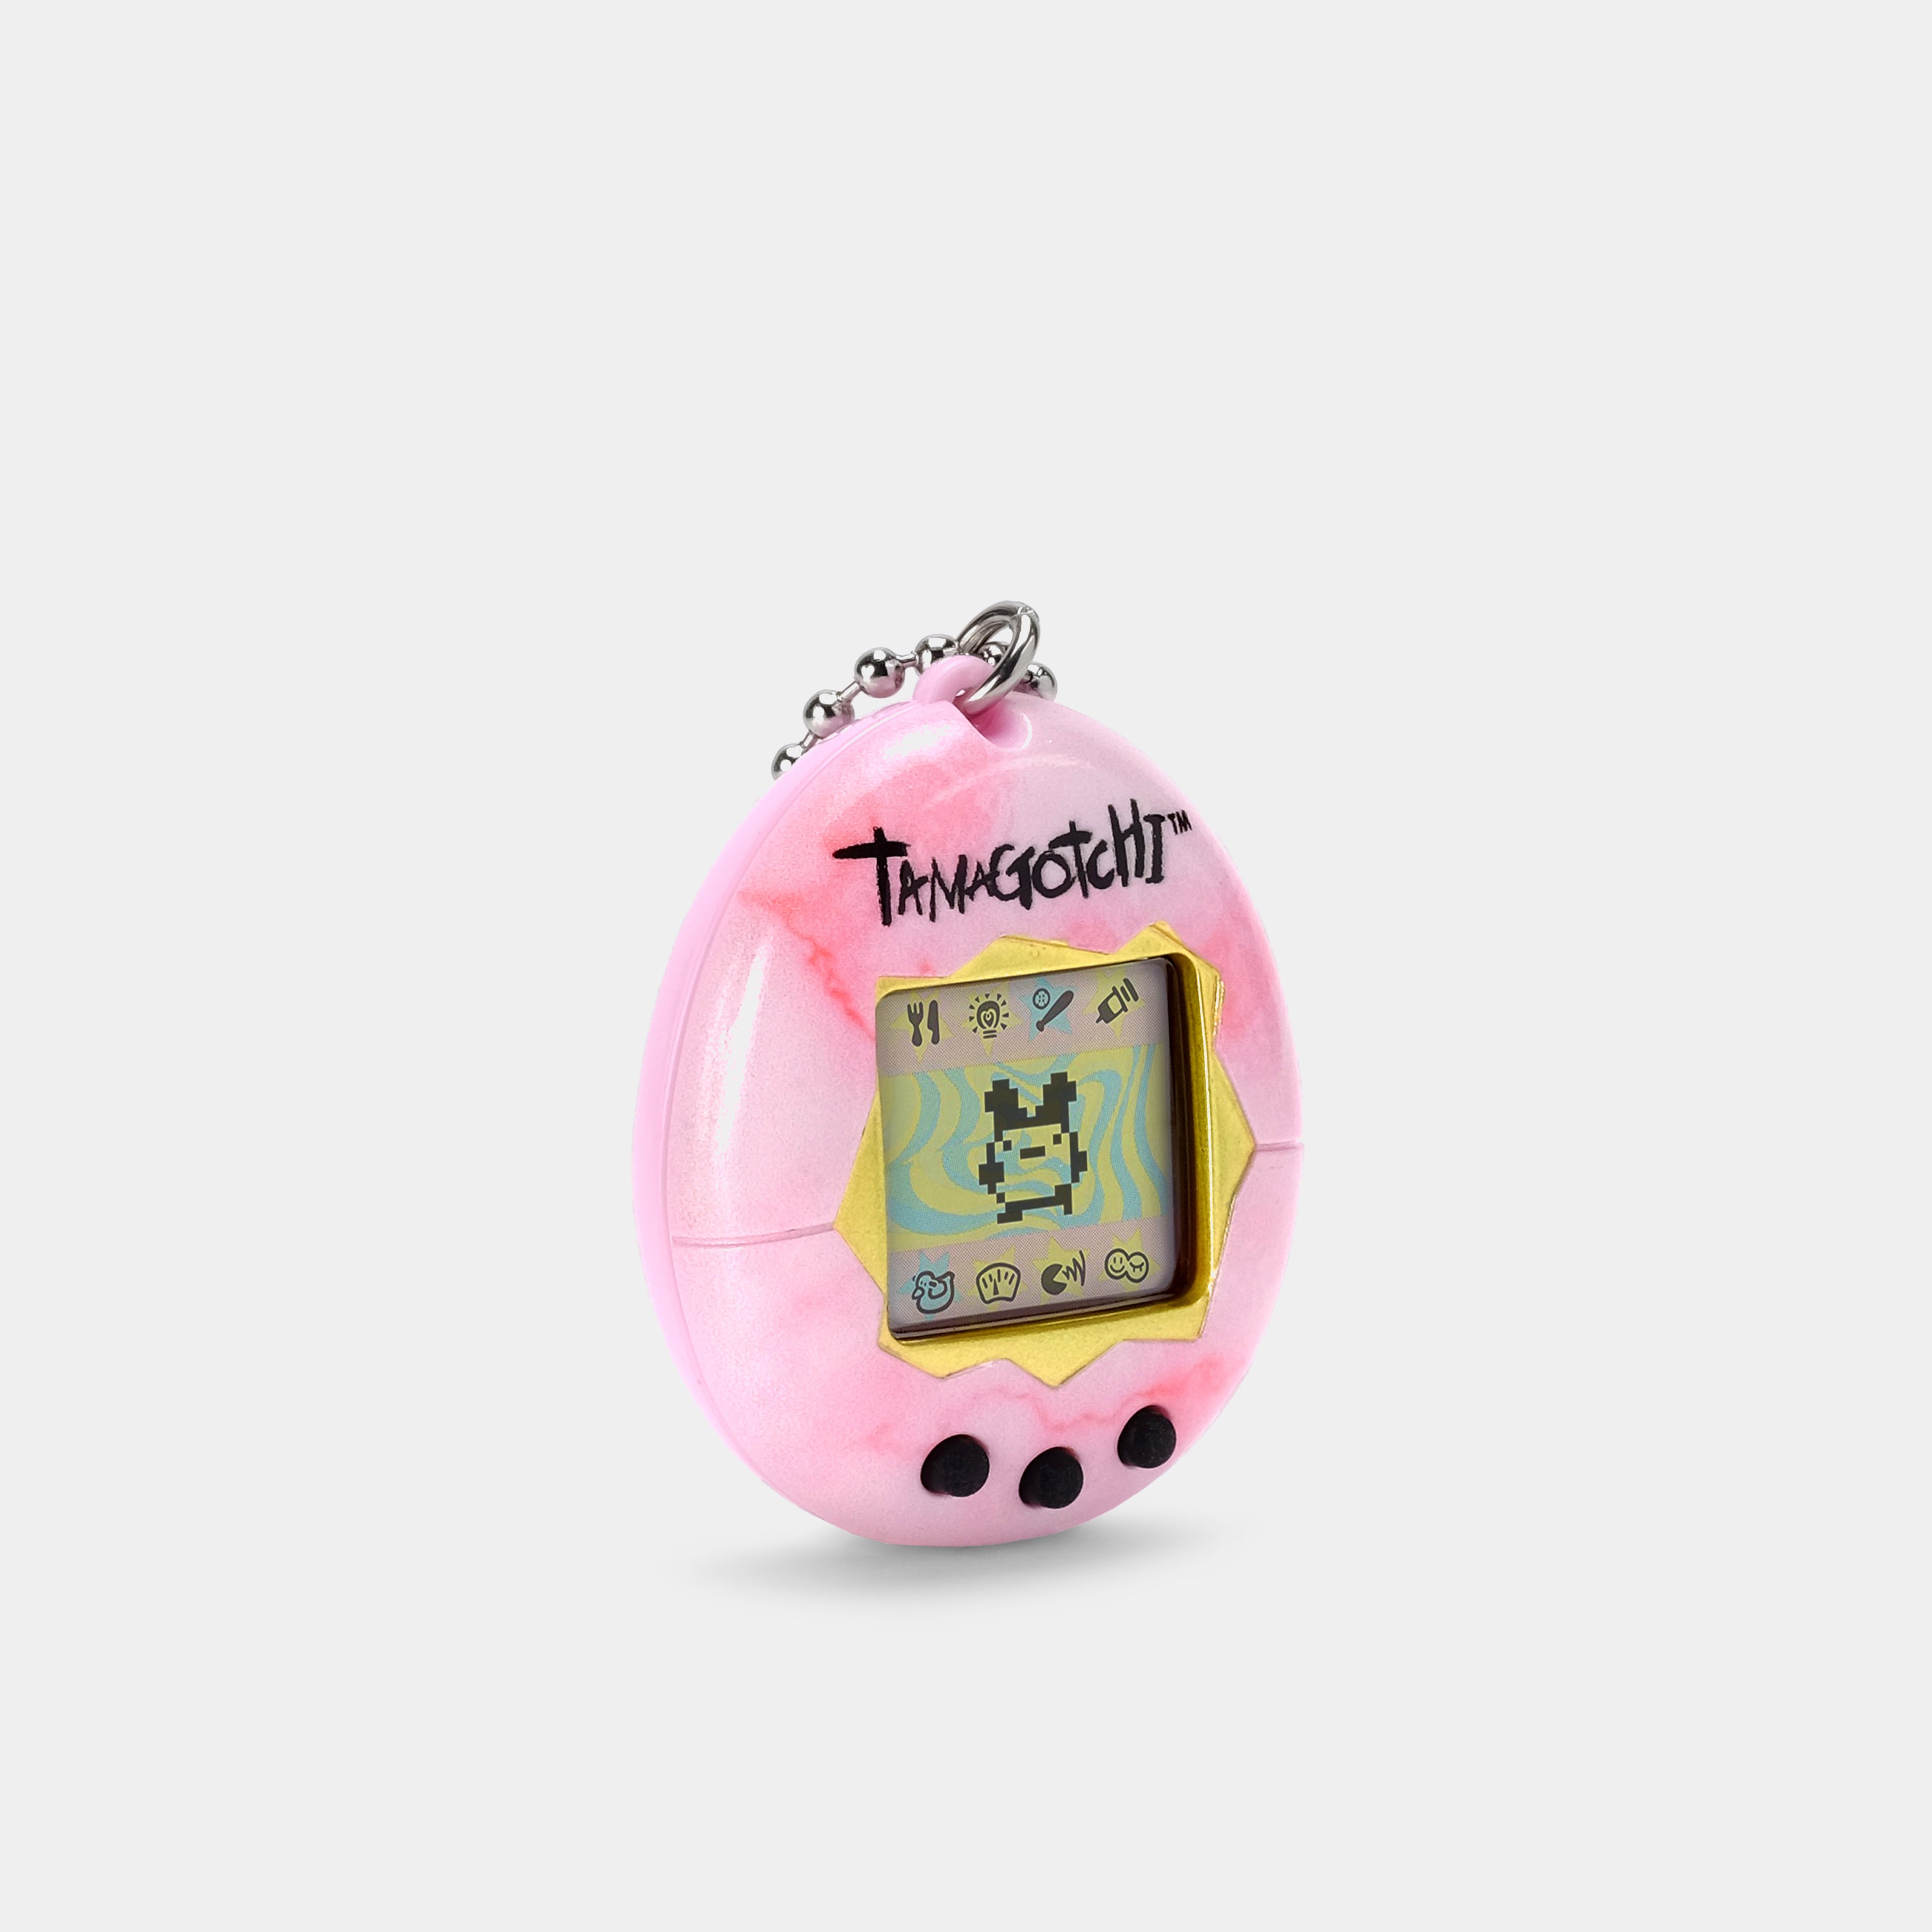 Original Tamagotchi (Gen. 2) Pink Glitter Virtual Pet